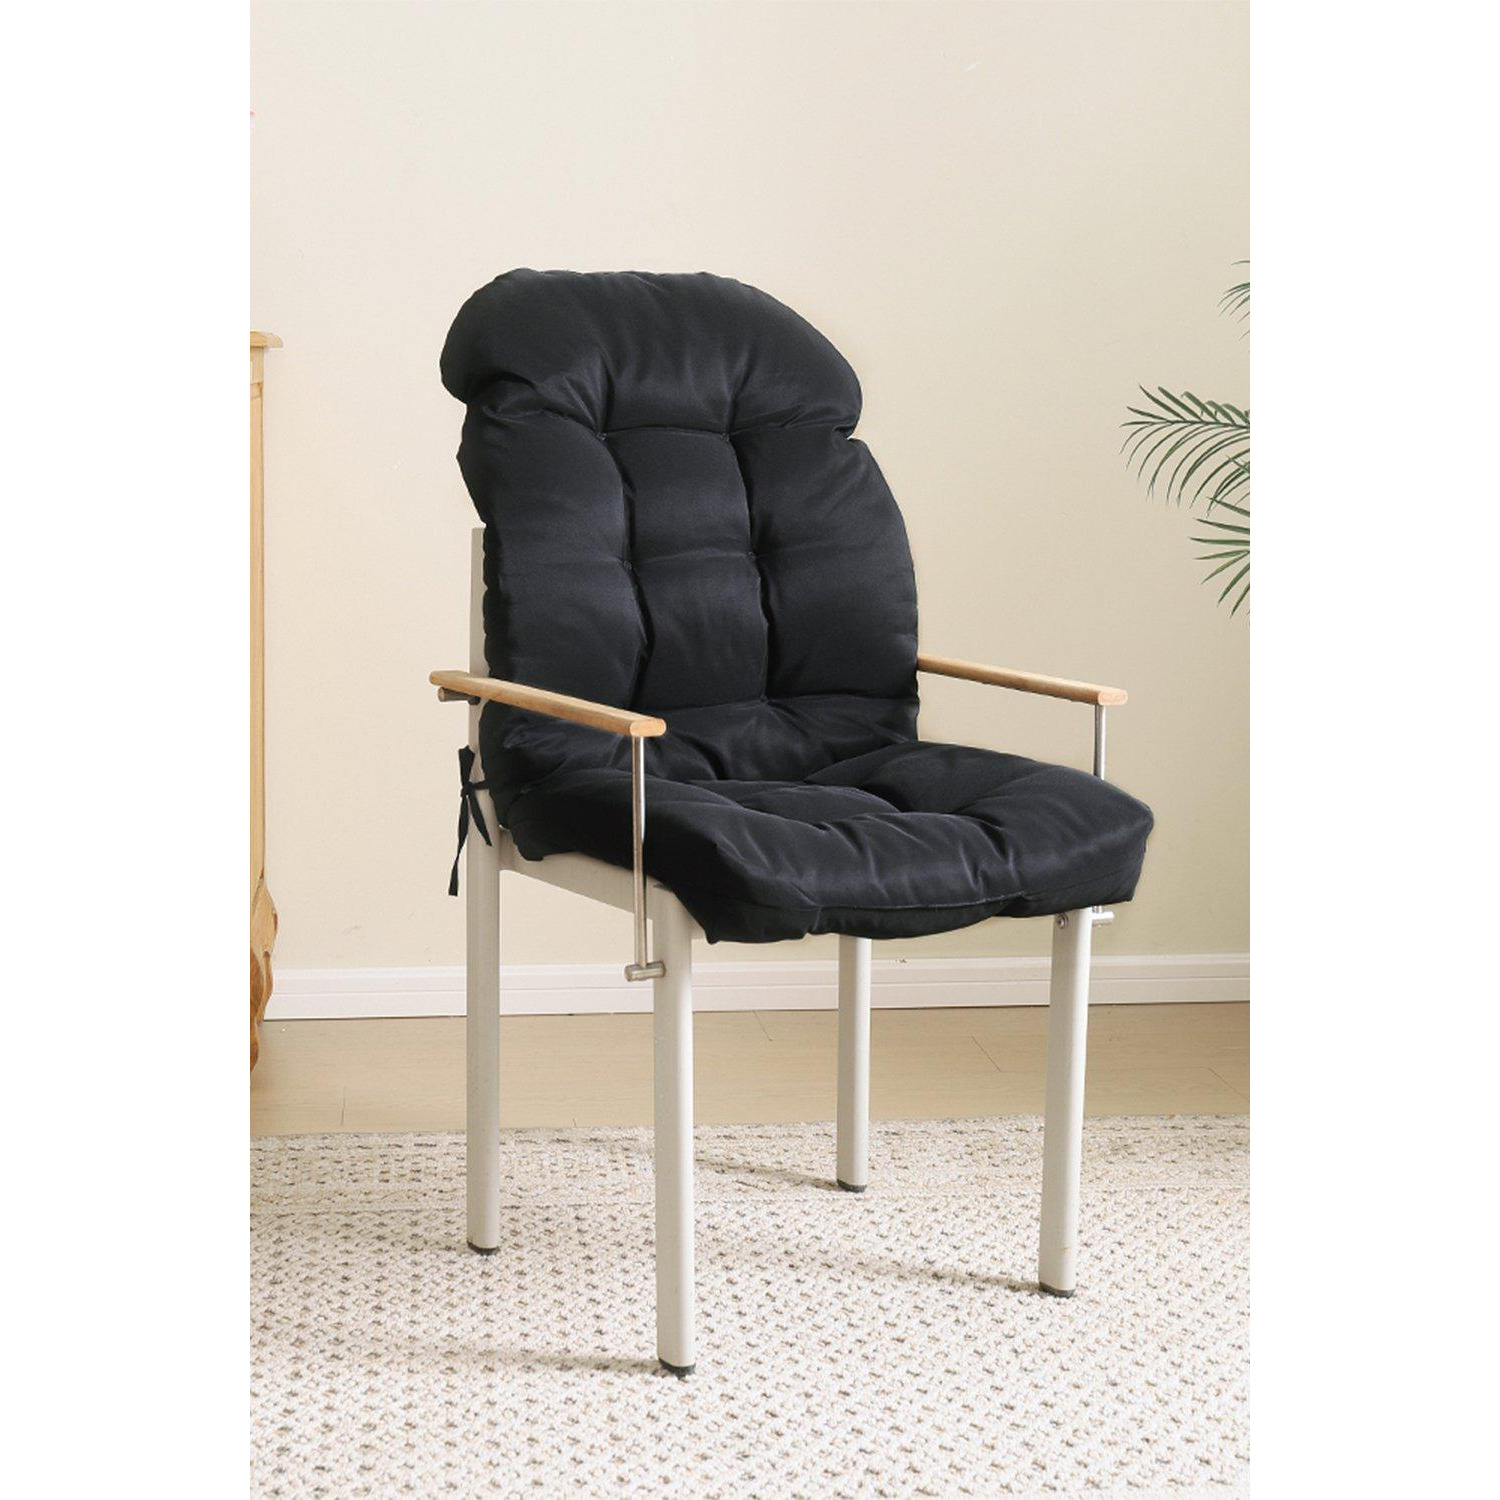 125CM x 53CM Outdoor Waterproof Tufted Swing Seat Cushion - image 1